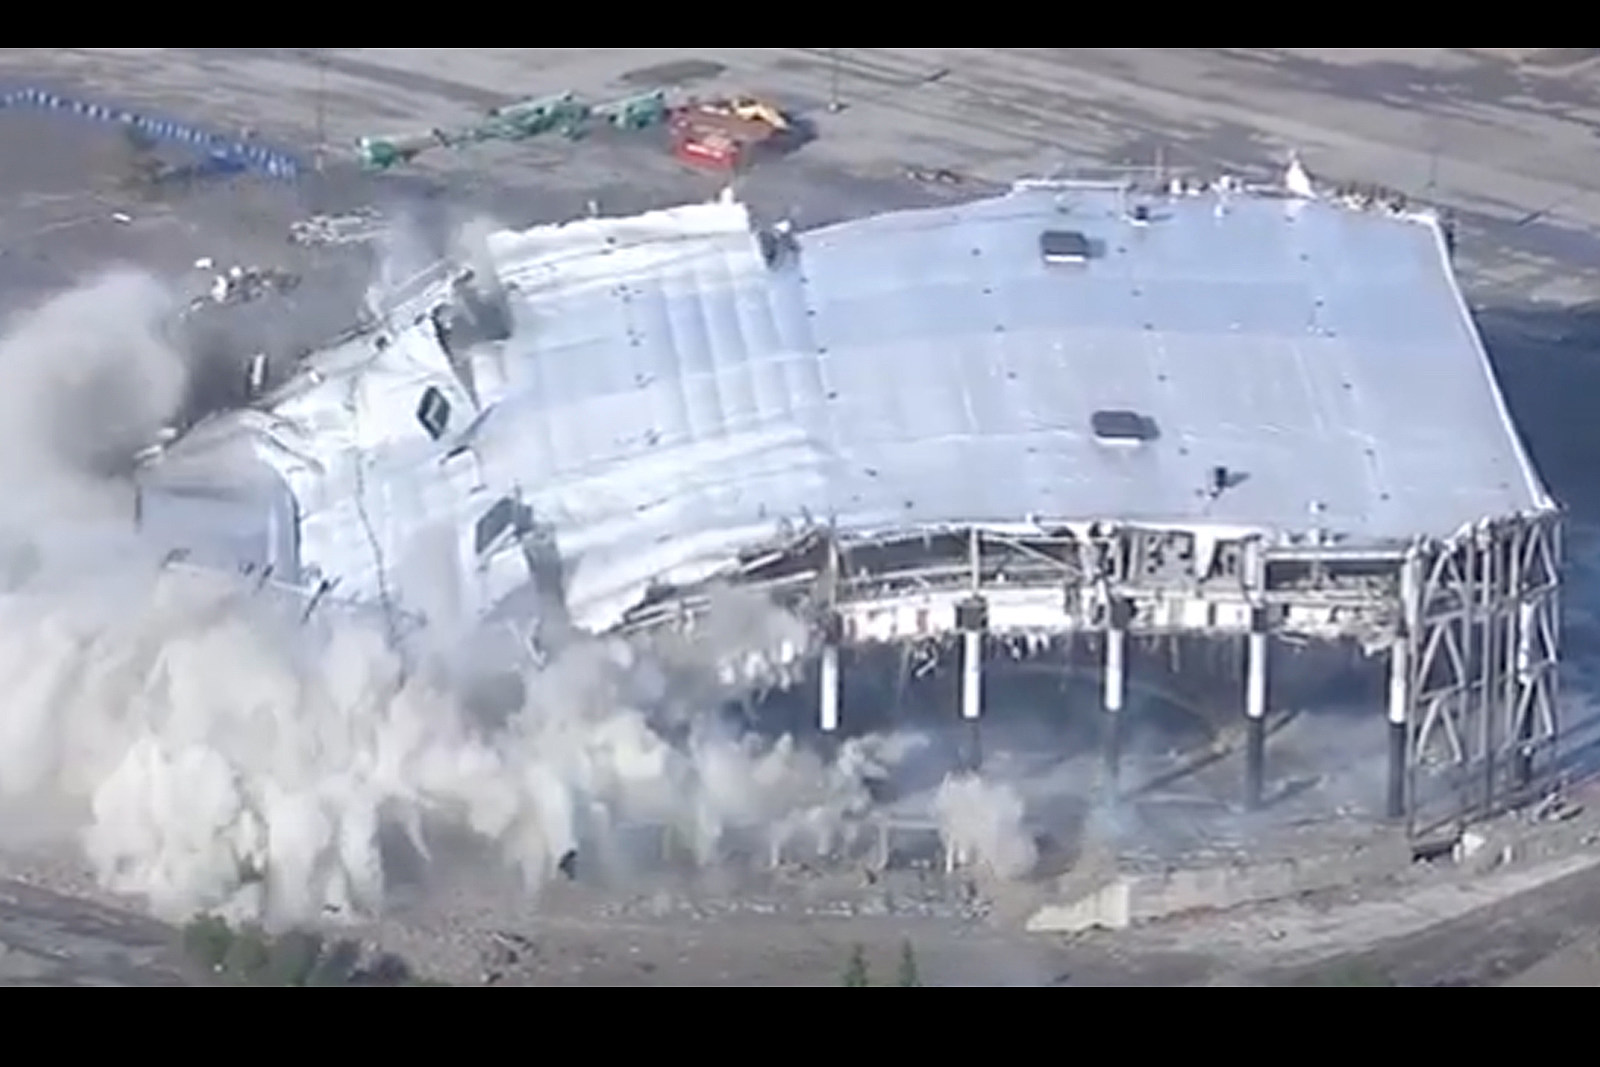 Watch Implosion of Detroit's Palace of Auburn Hills Concert Venue